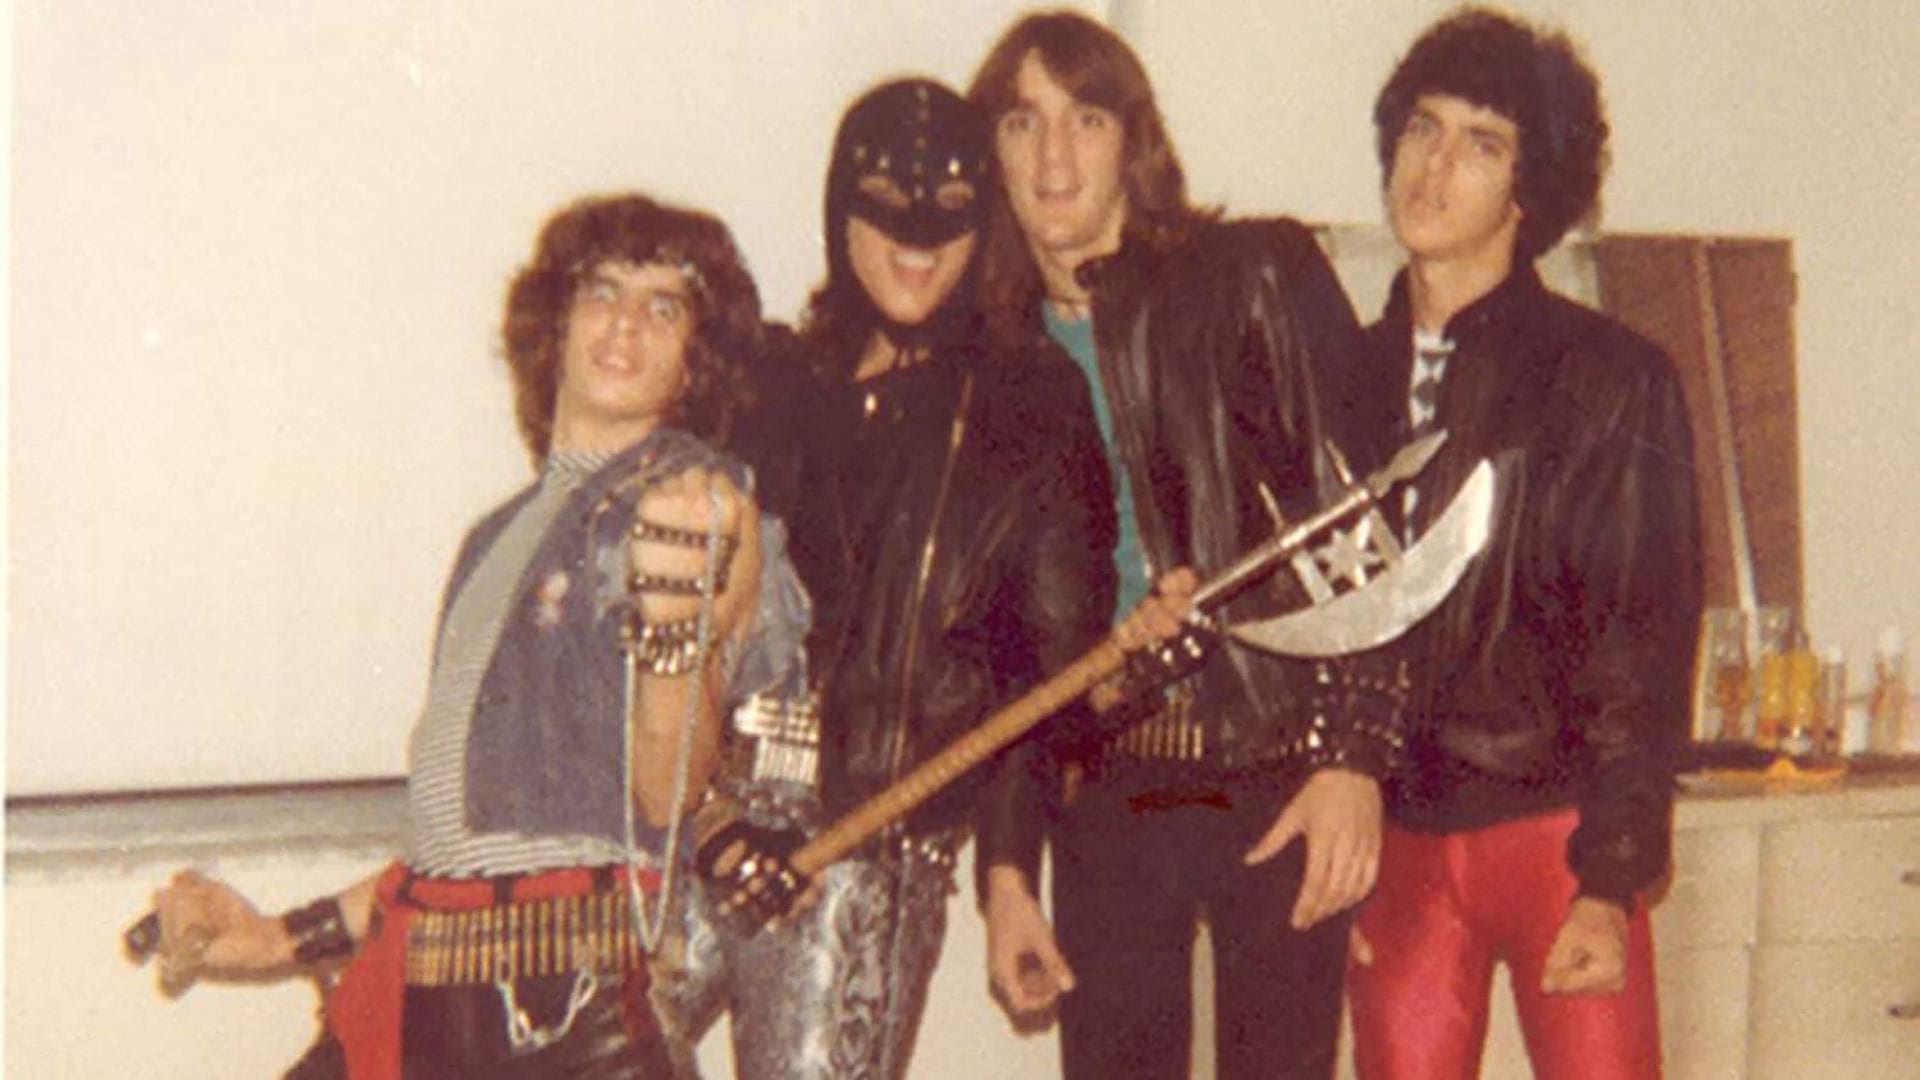 32 Years Ago: NASTY SAVAGE release their debut on Metal Blade